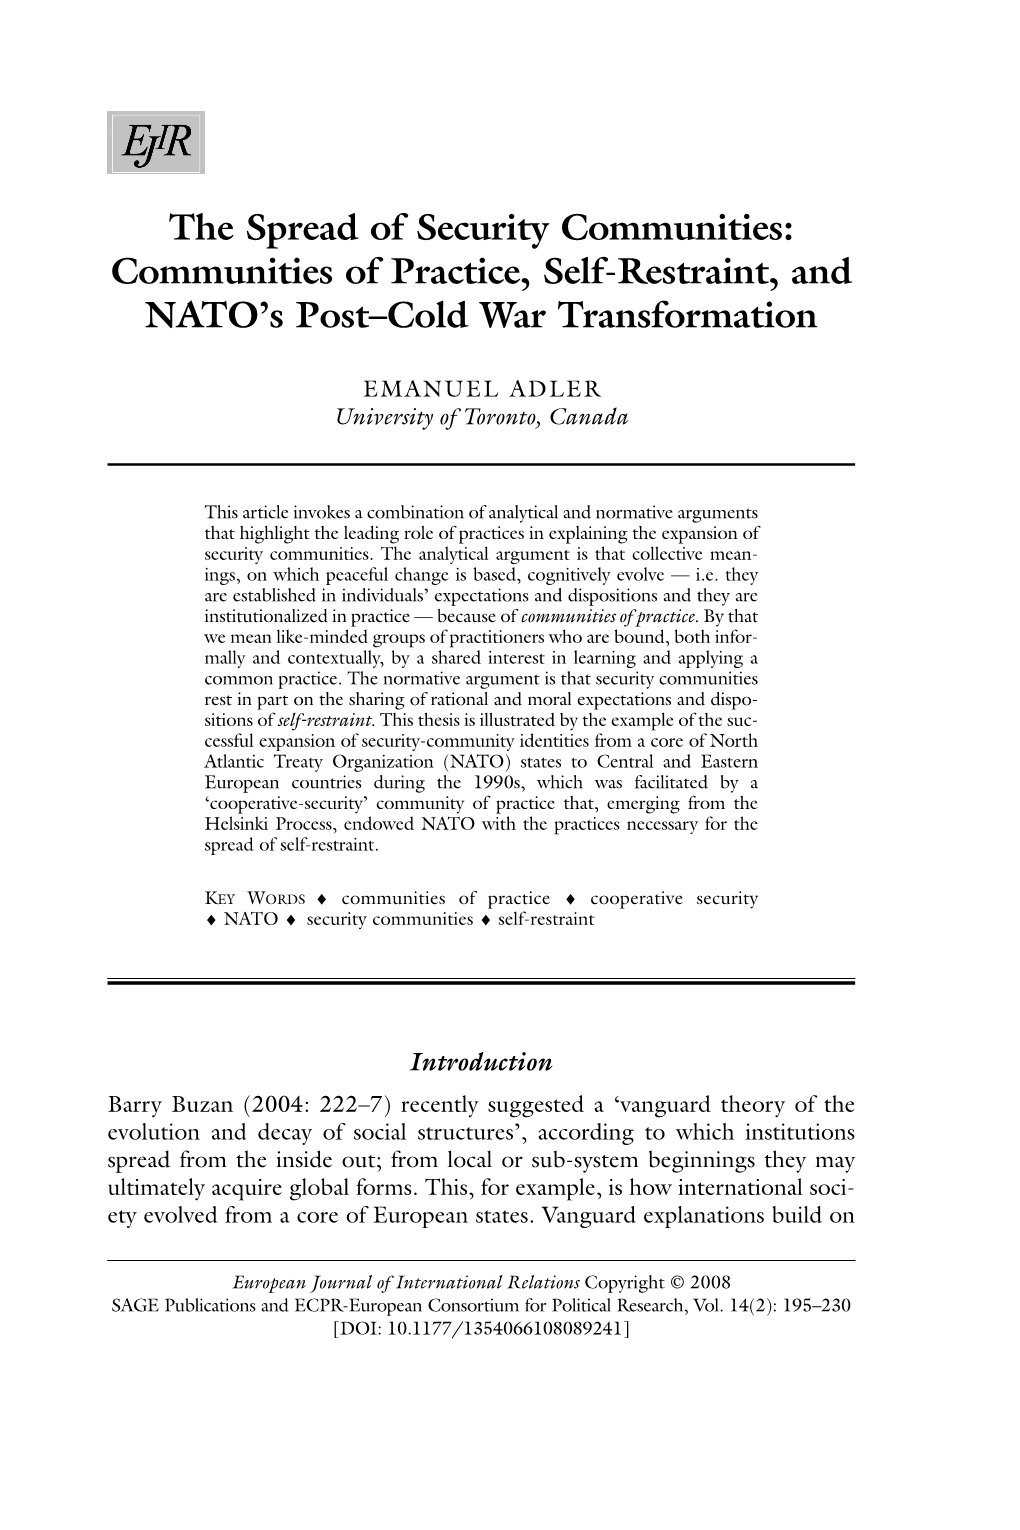 Communities of Practice, Self-Restraint, and NATO's Post